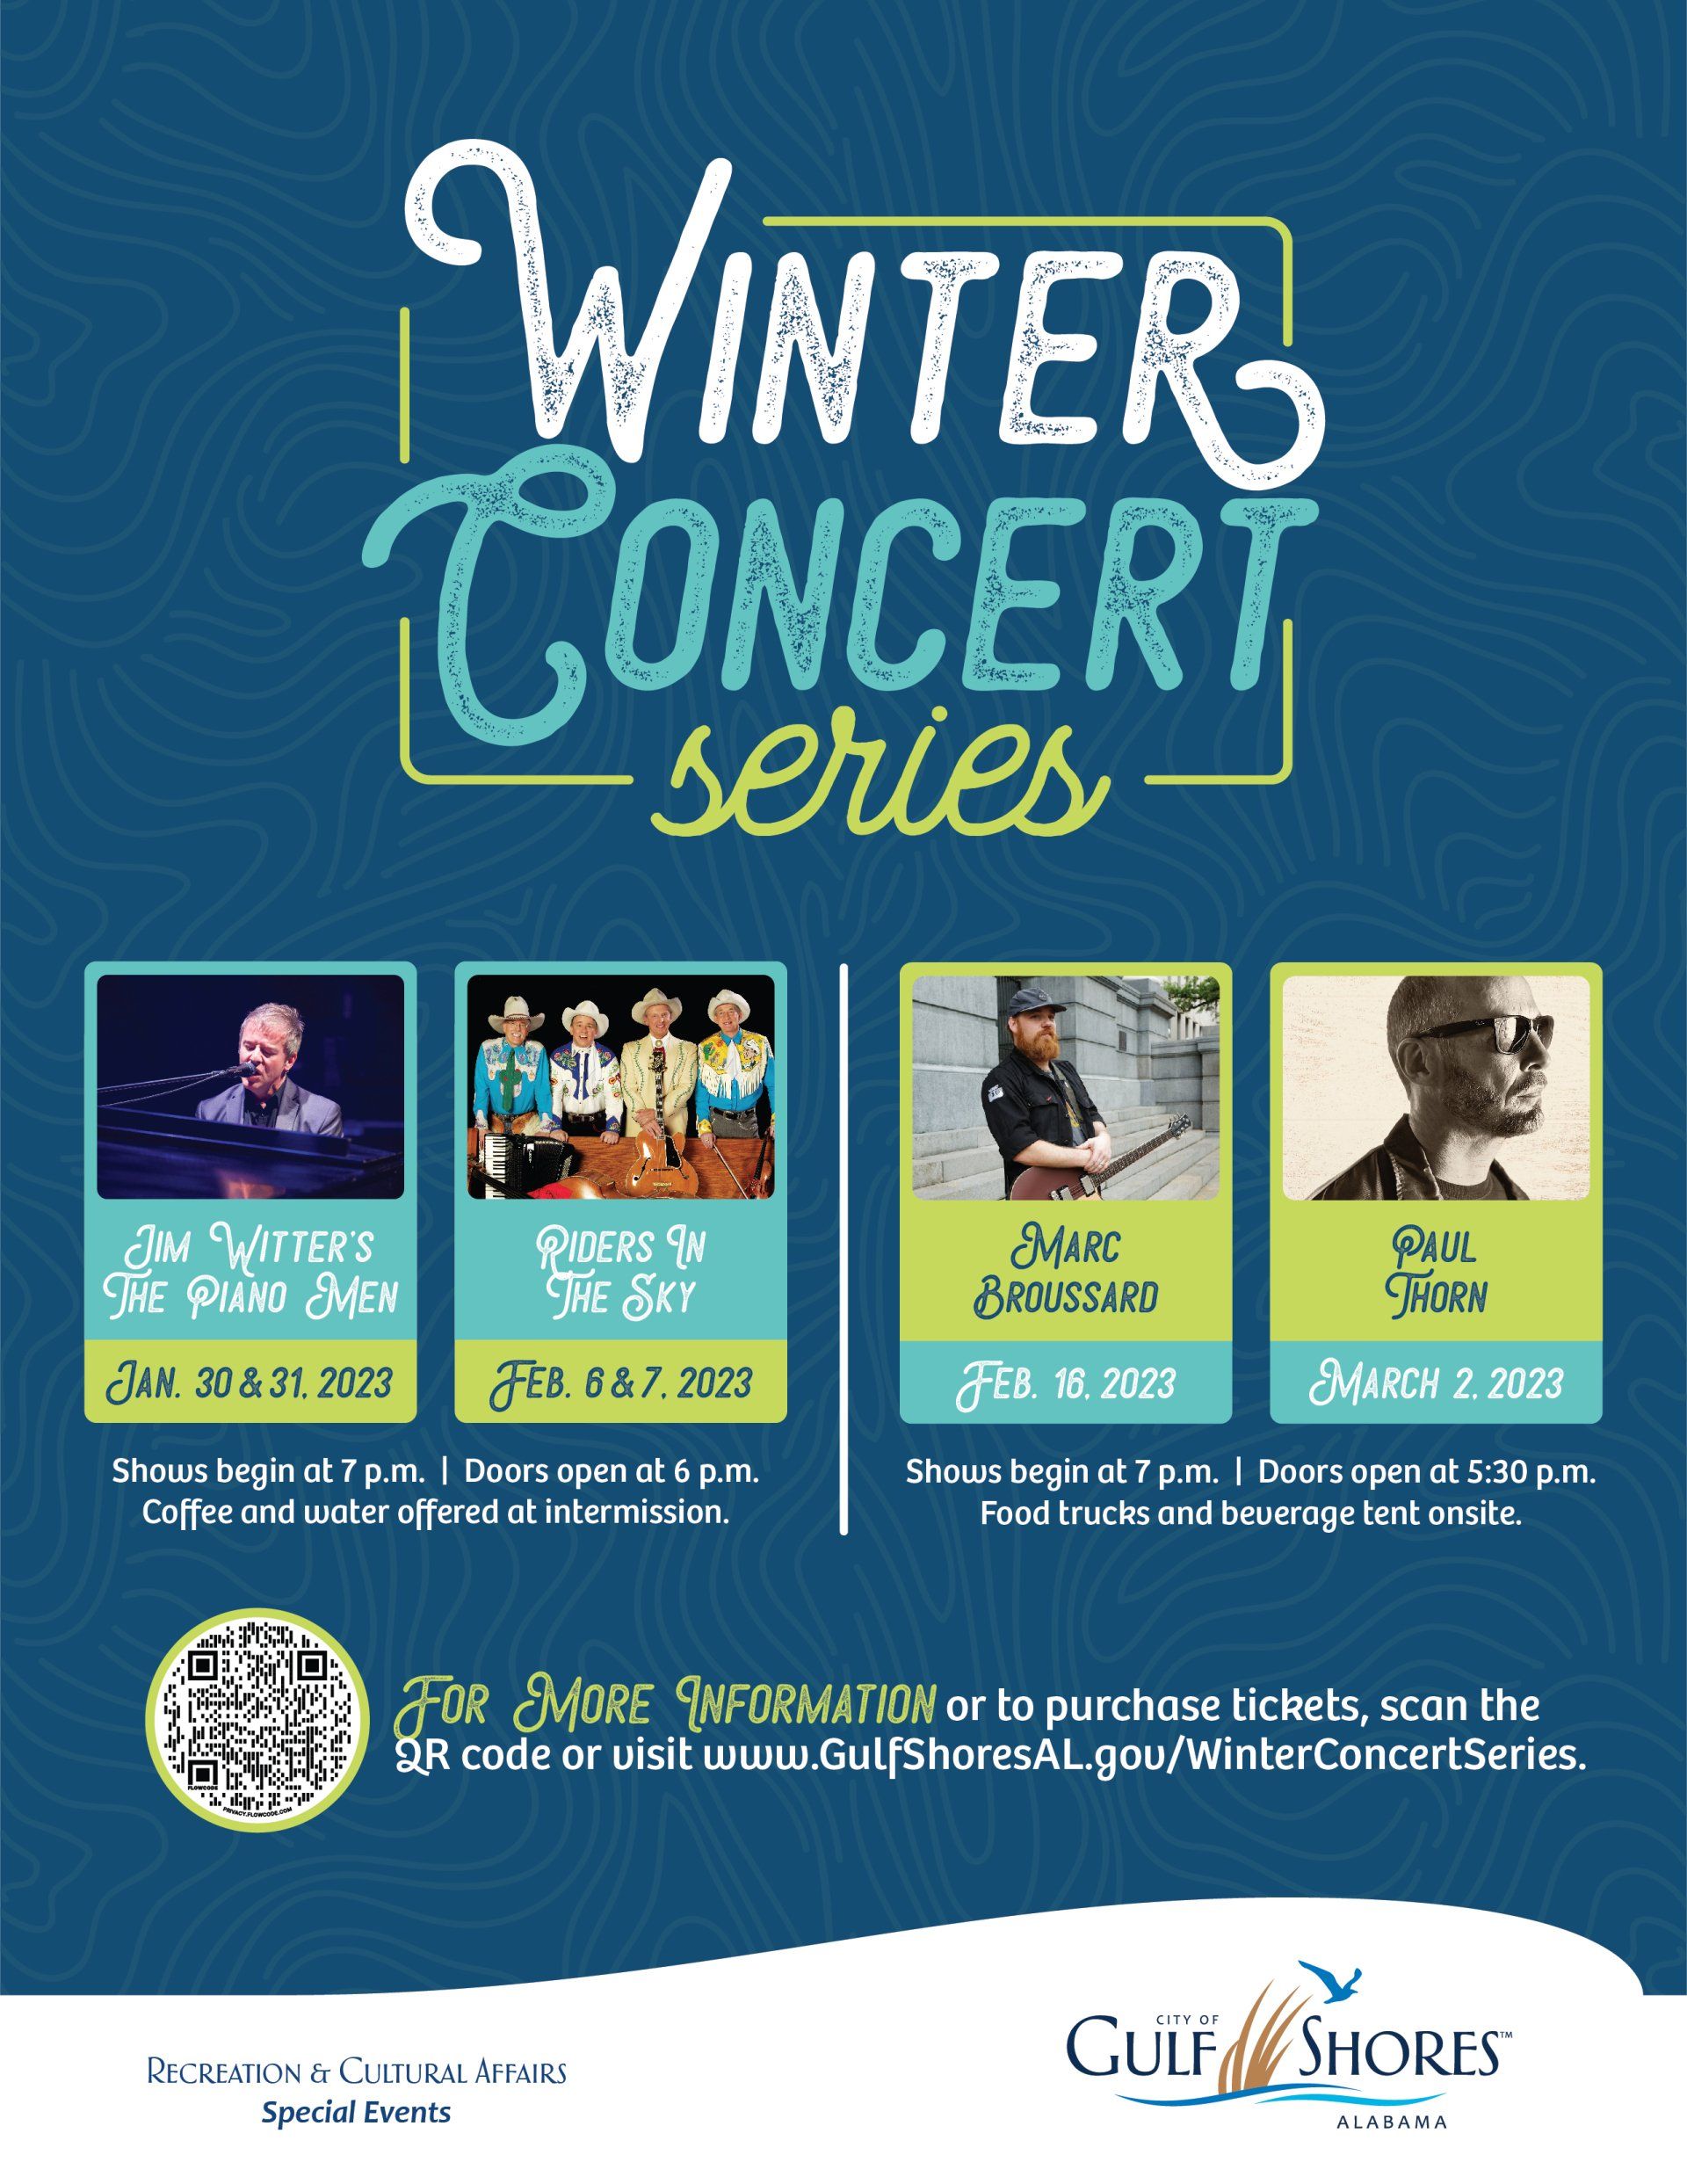 Gulf Shores announces Winter Concert Series lineup